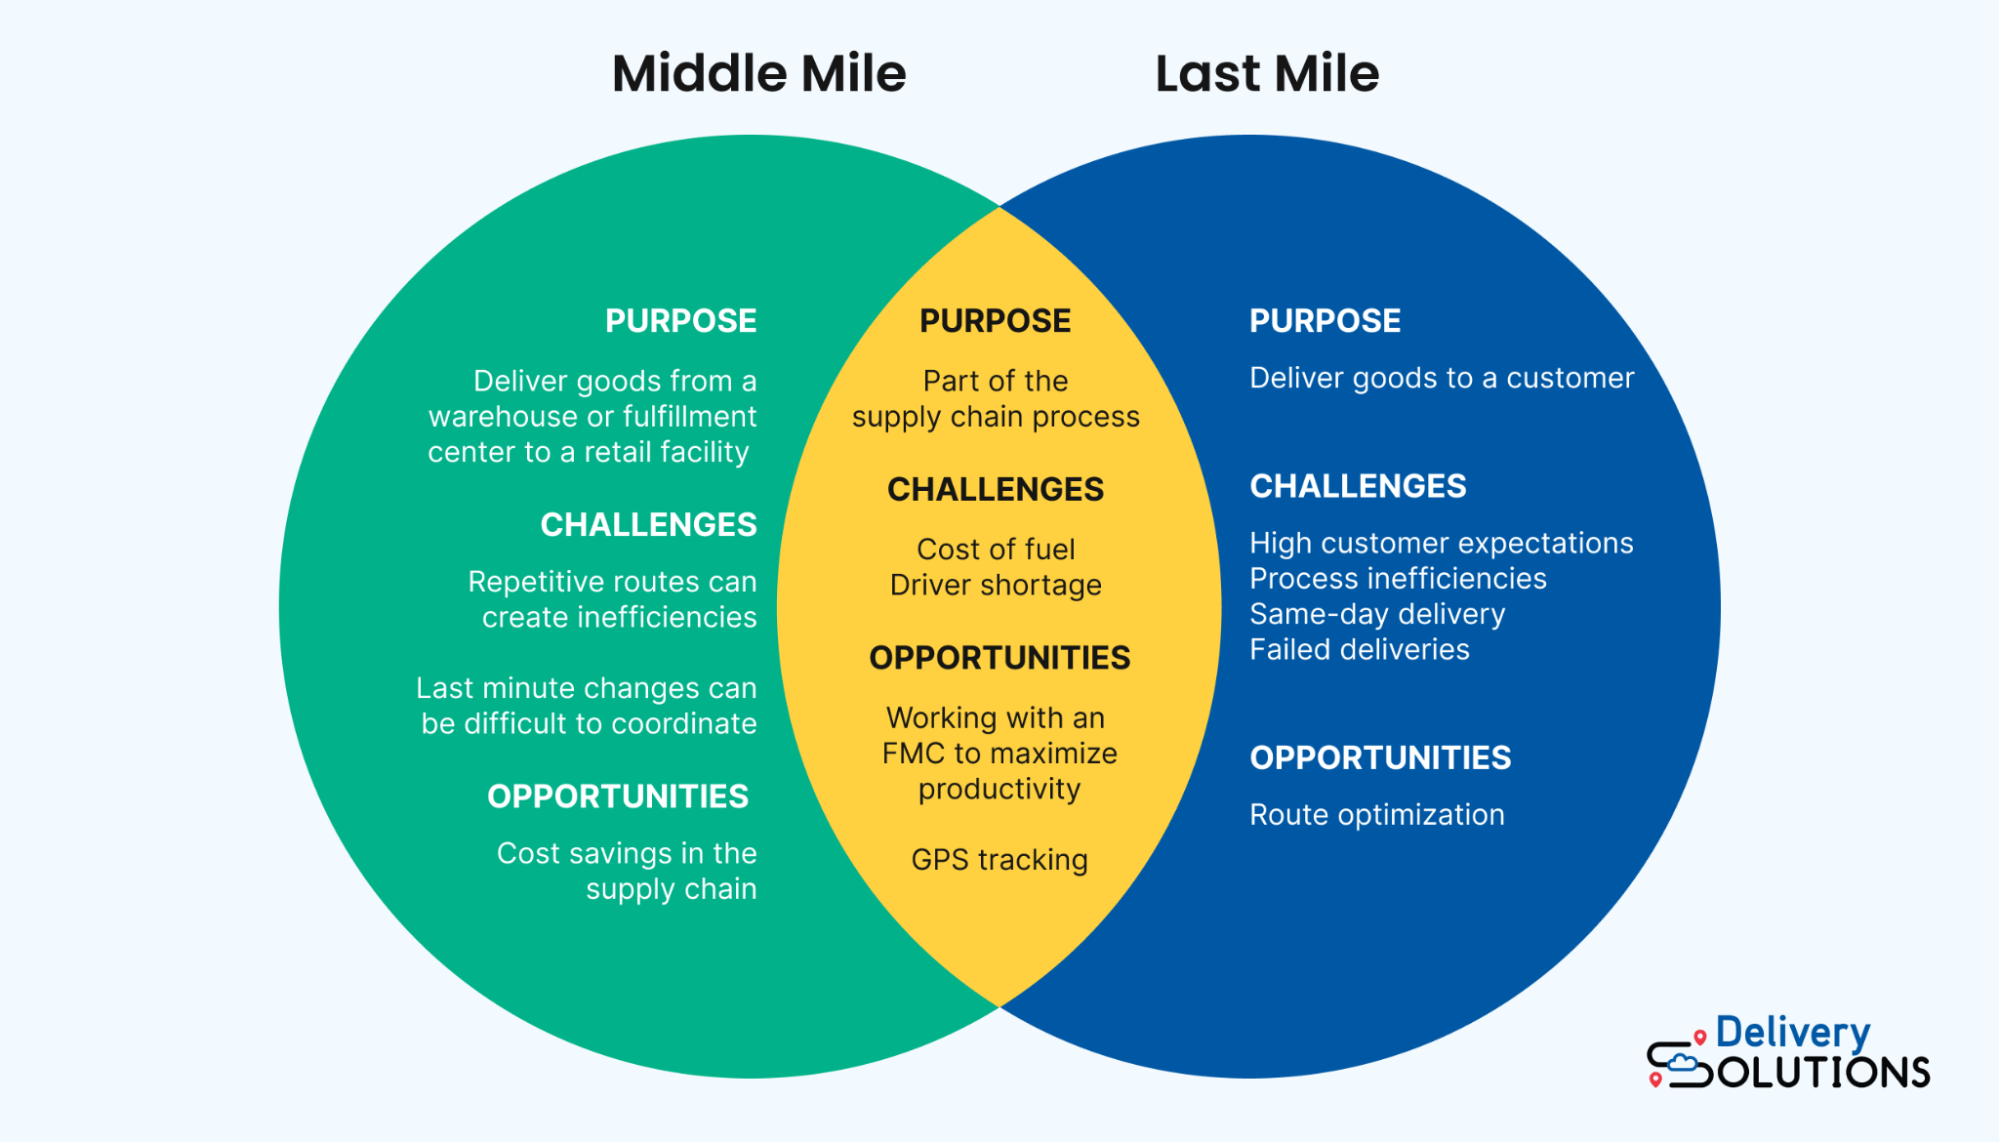 Middle mile vs last mile infographic